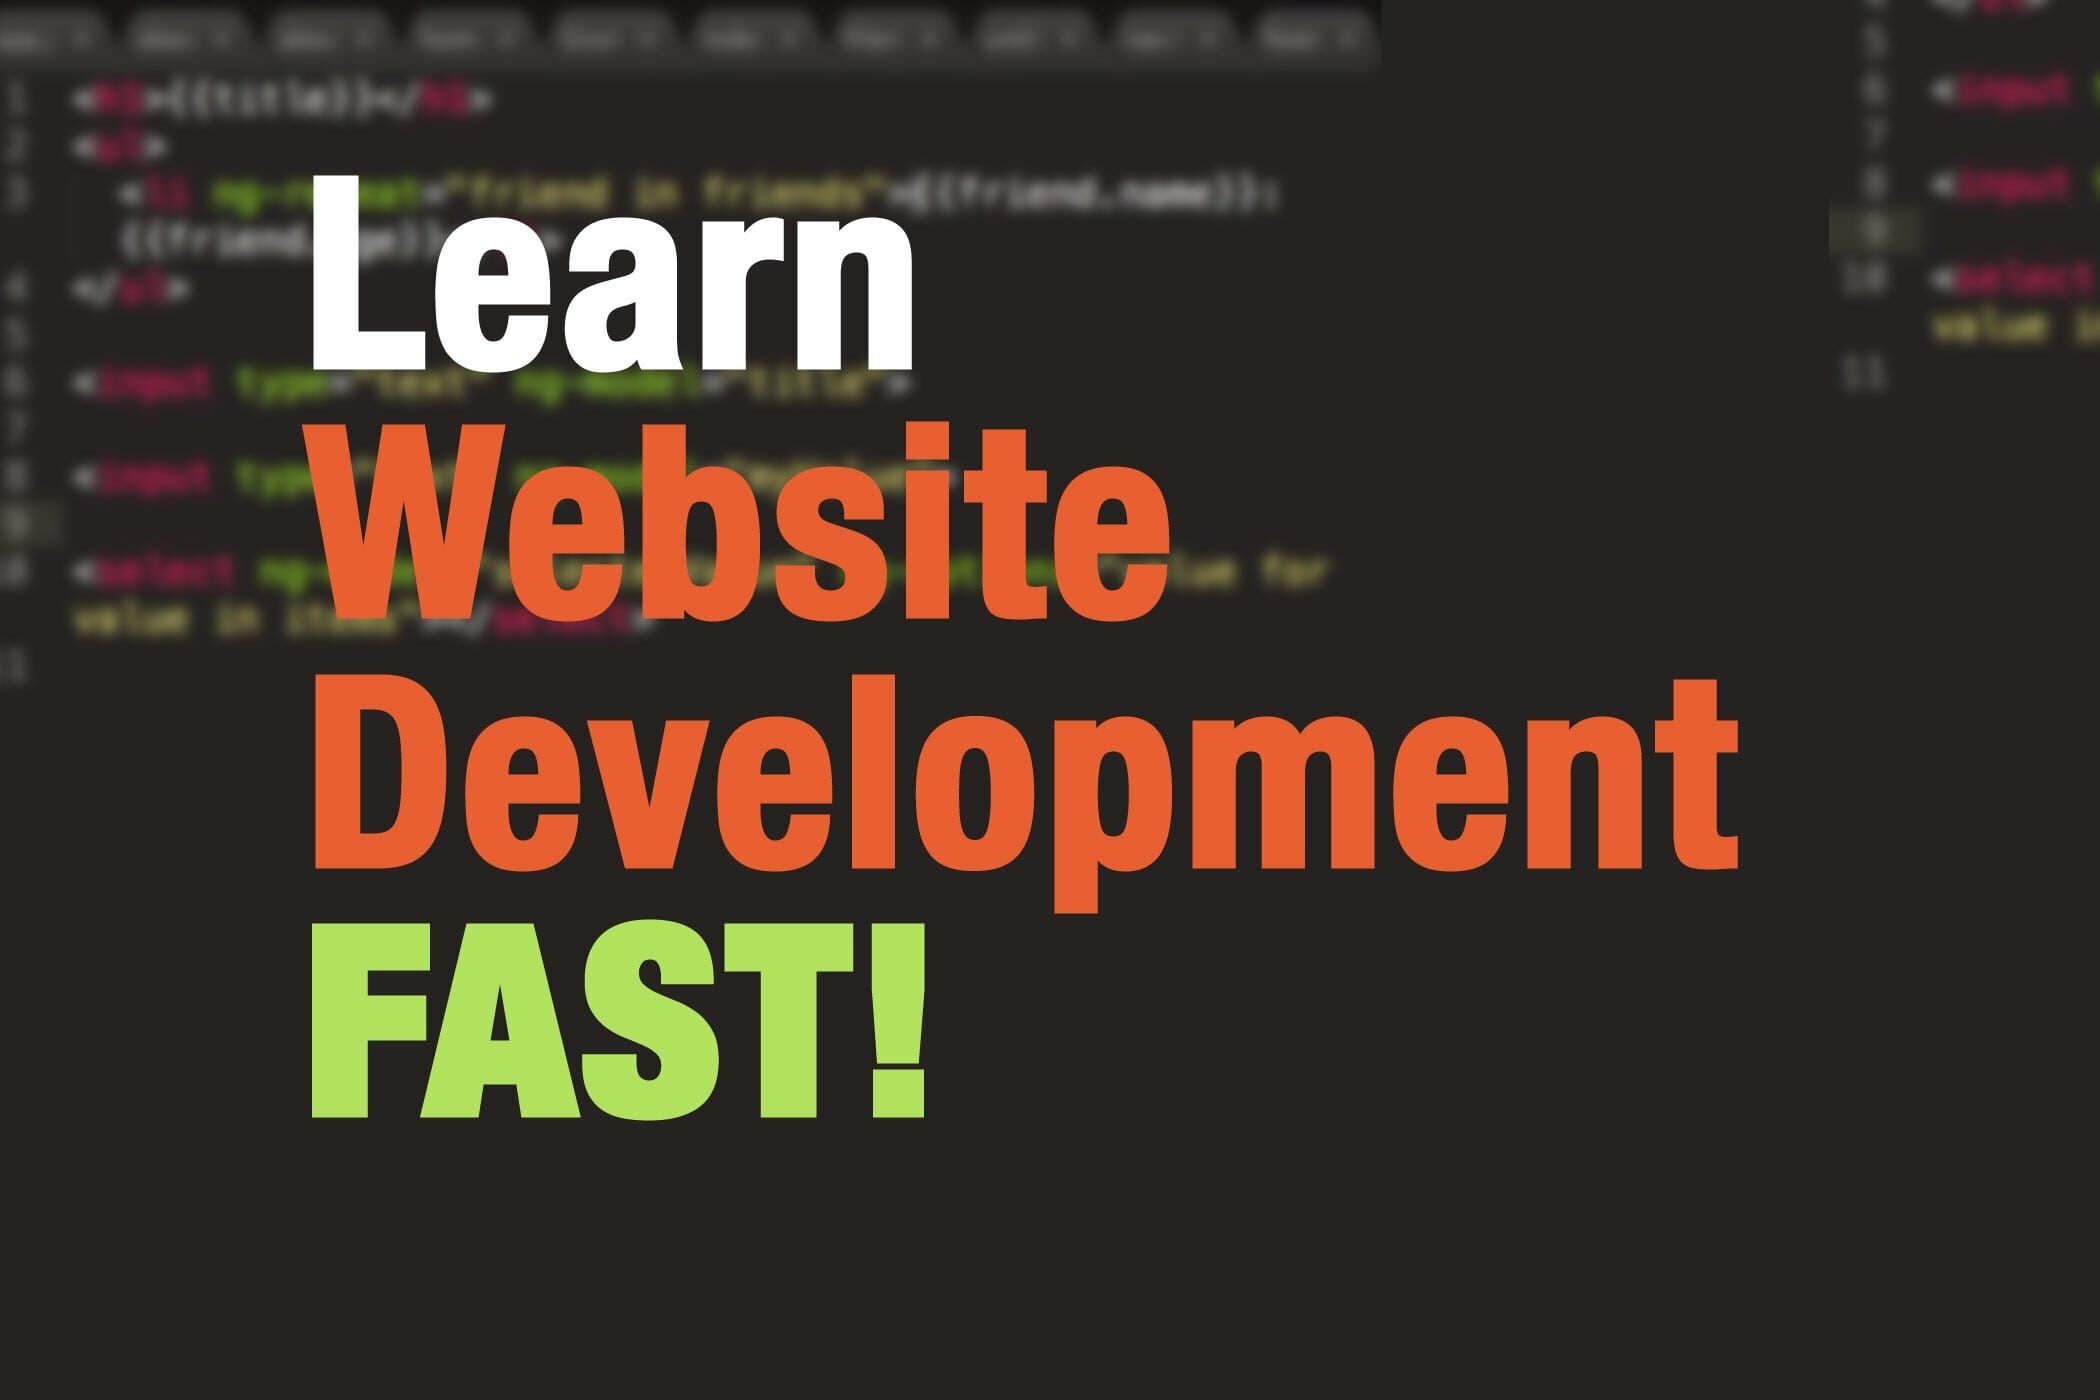 web development tutorial for beginners by devslopes